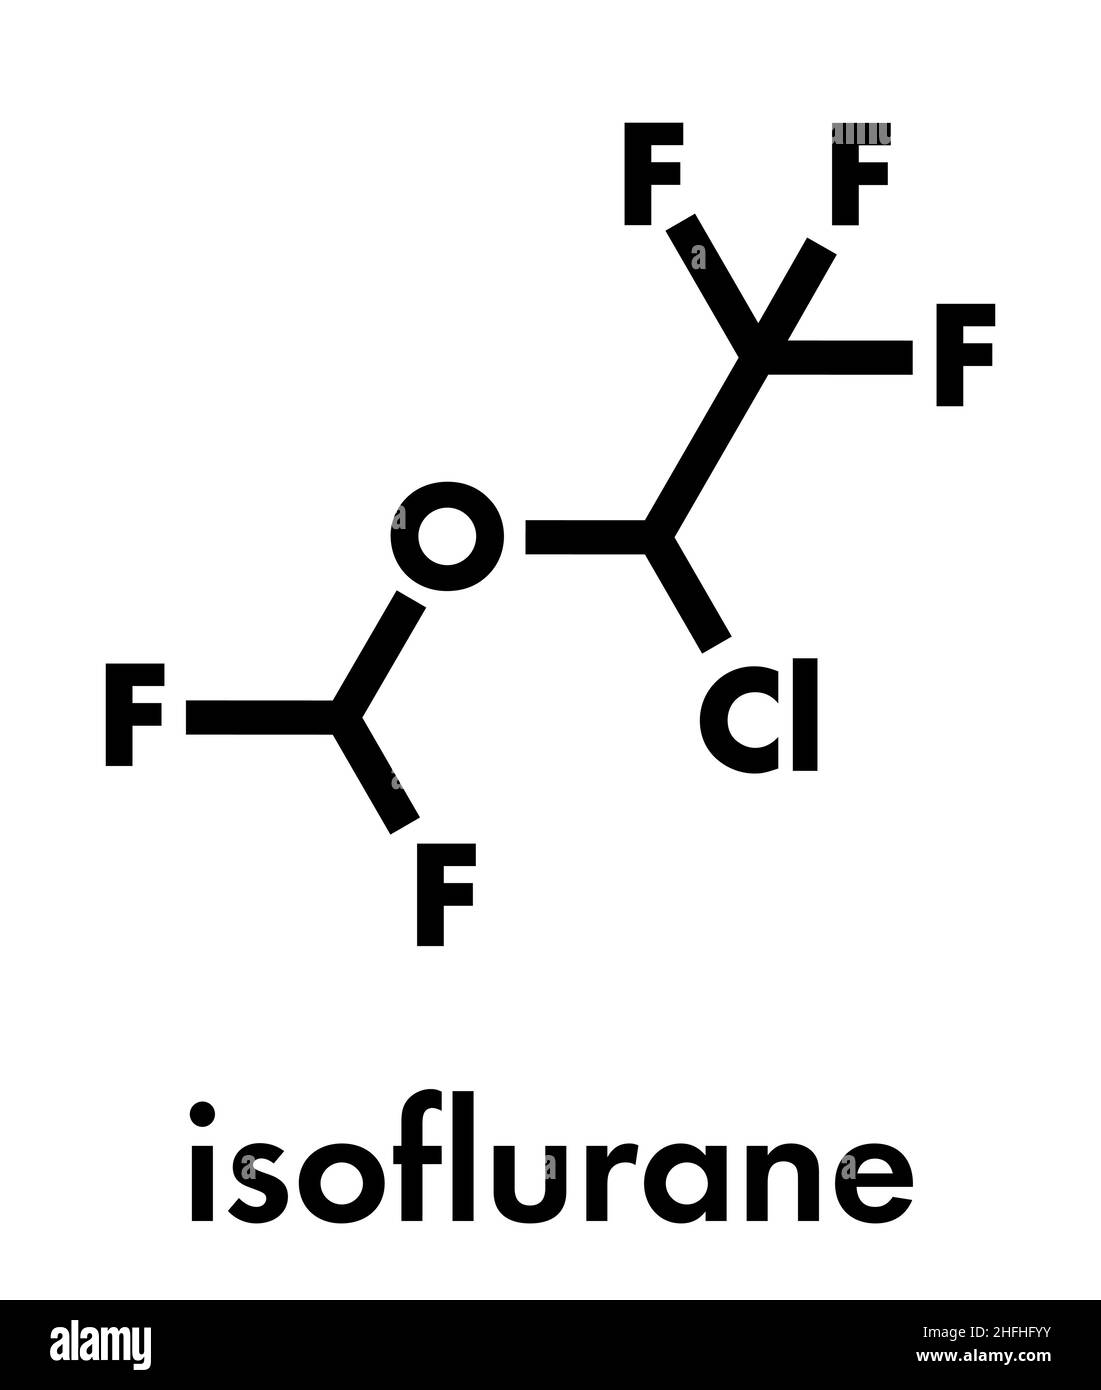 Isoflurane anesthetic drug molecule. Used for inhalational anesthesia during surgery. Skeletal formula. Stock Vector